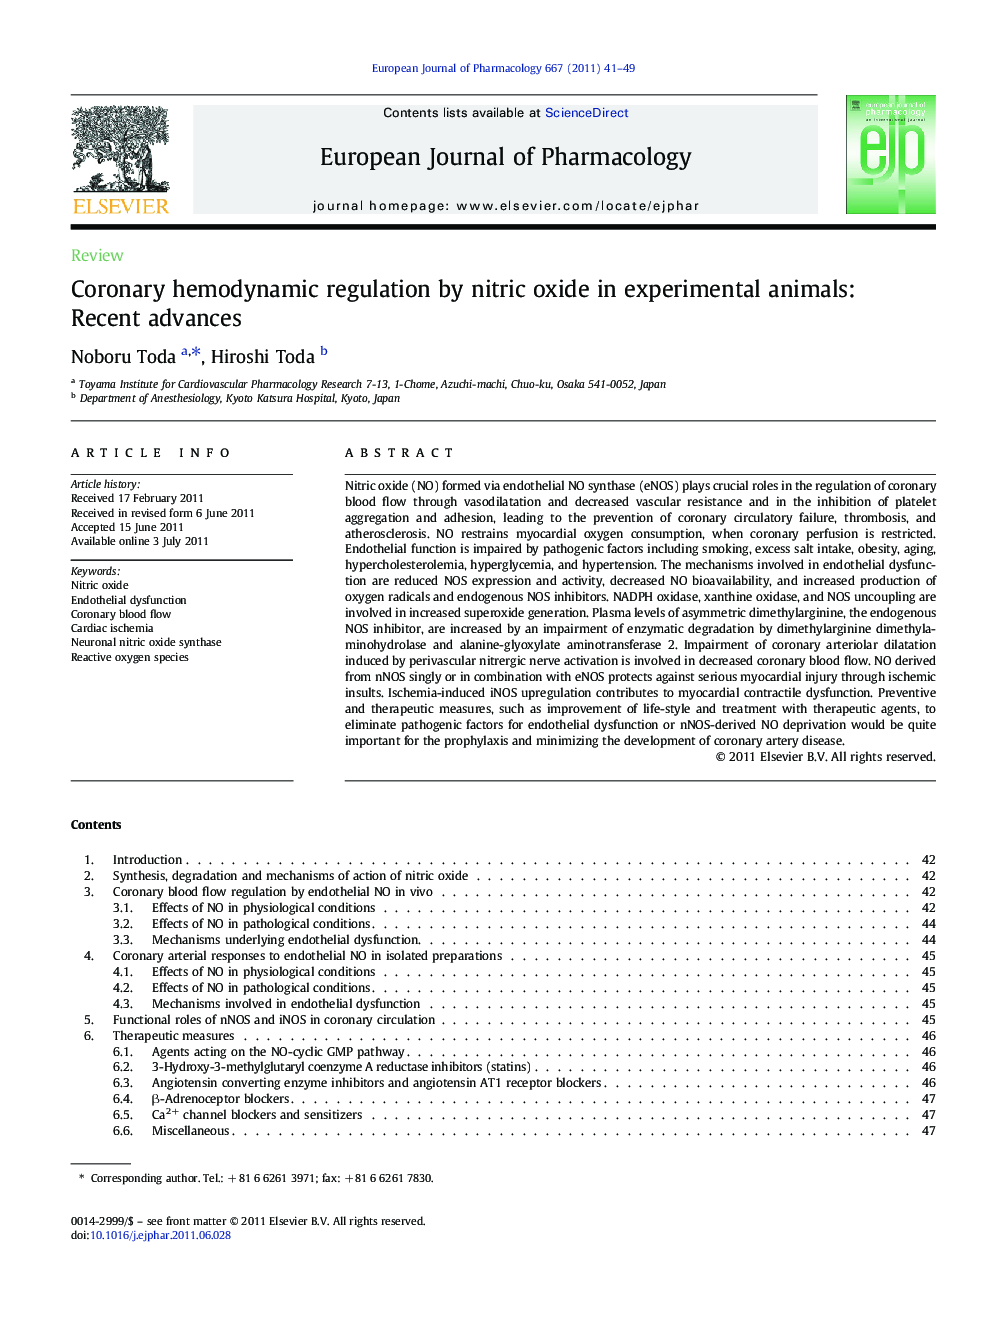 Coronary hemodynamic regulation by nitric oxide in experimental animals: Recent advances